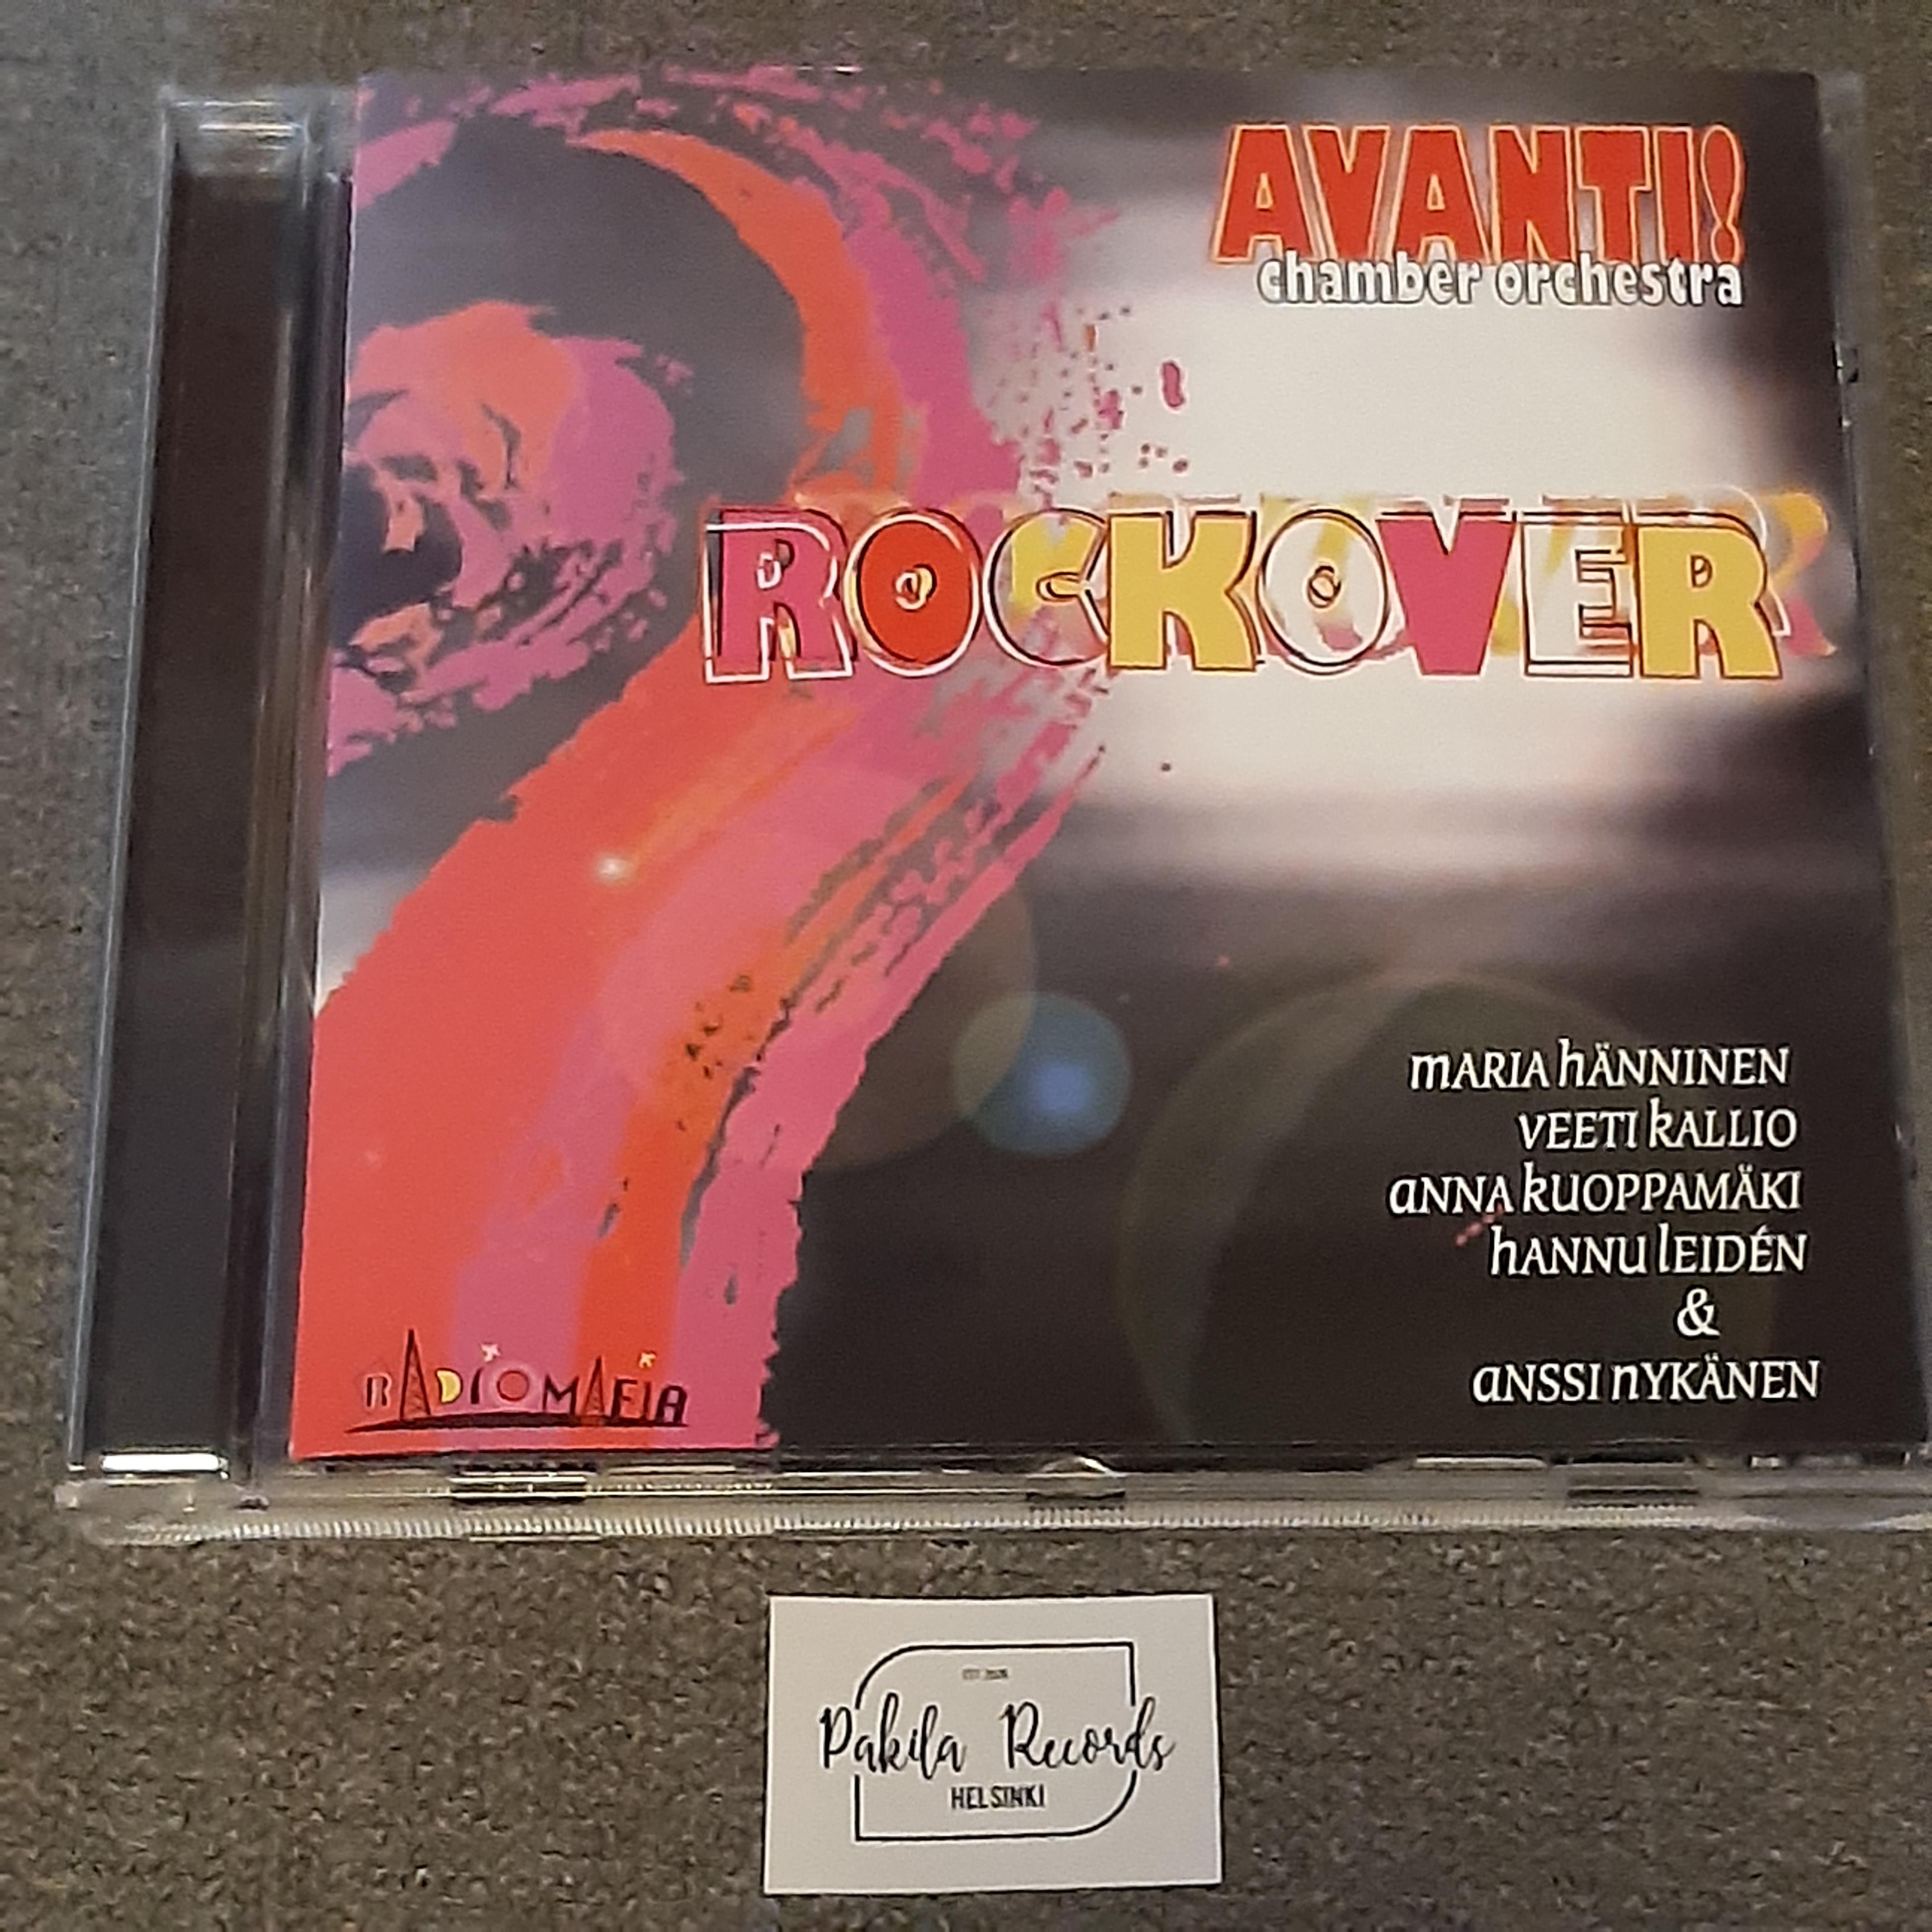 Avanti! Chamber Orchestra: Rockover - CD (käytetty)